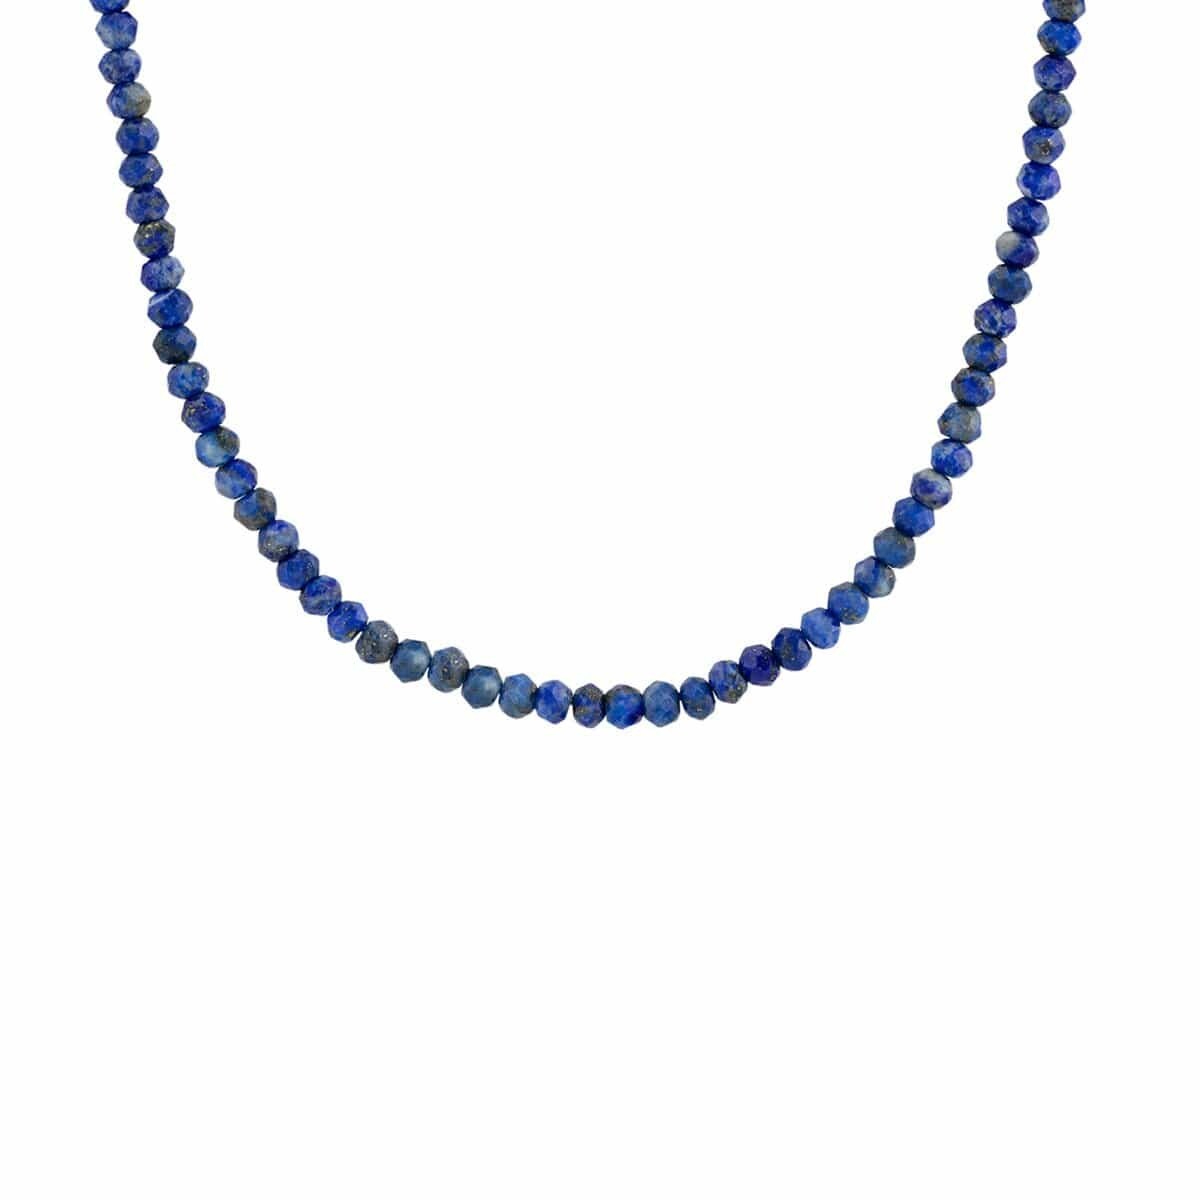 Kyanite necklace, 3.5mm